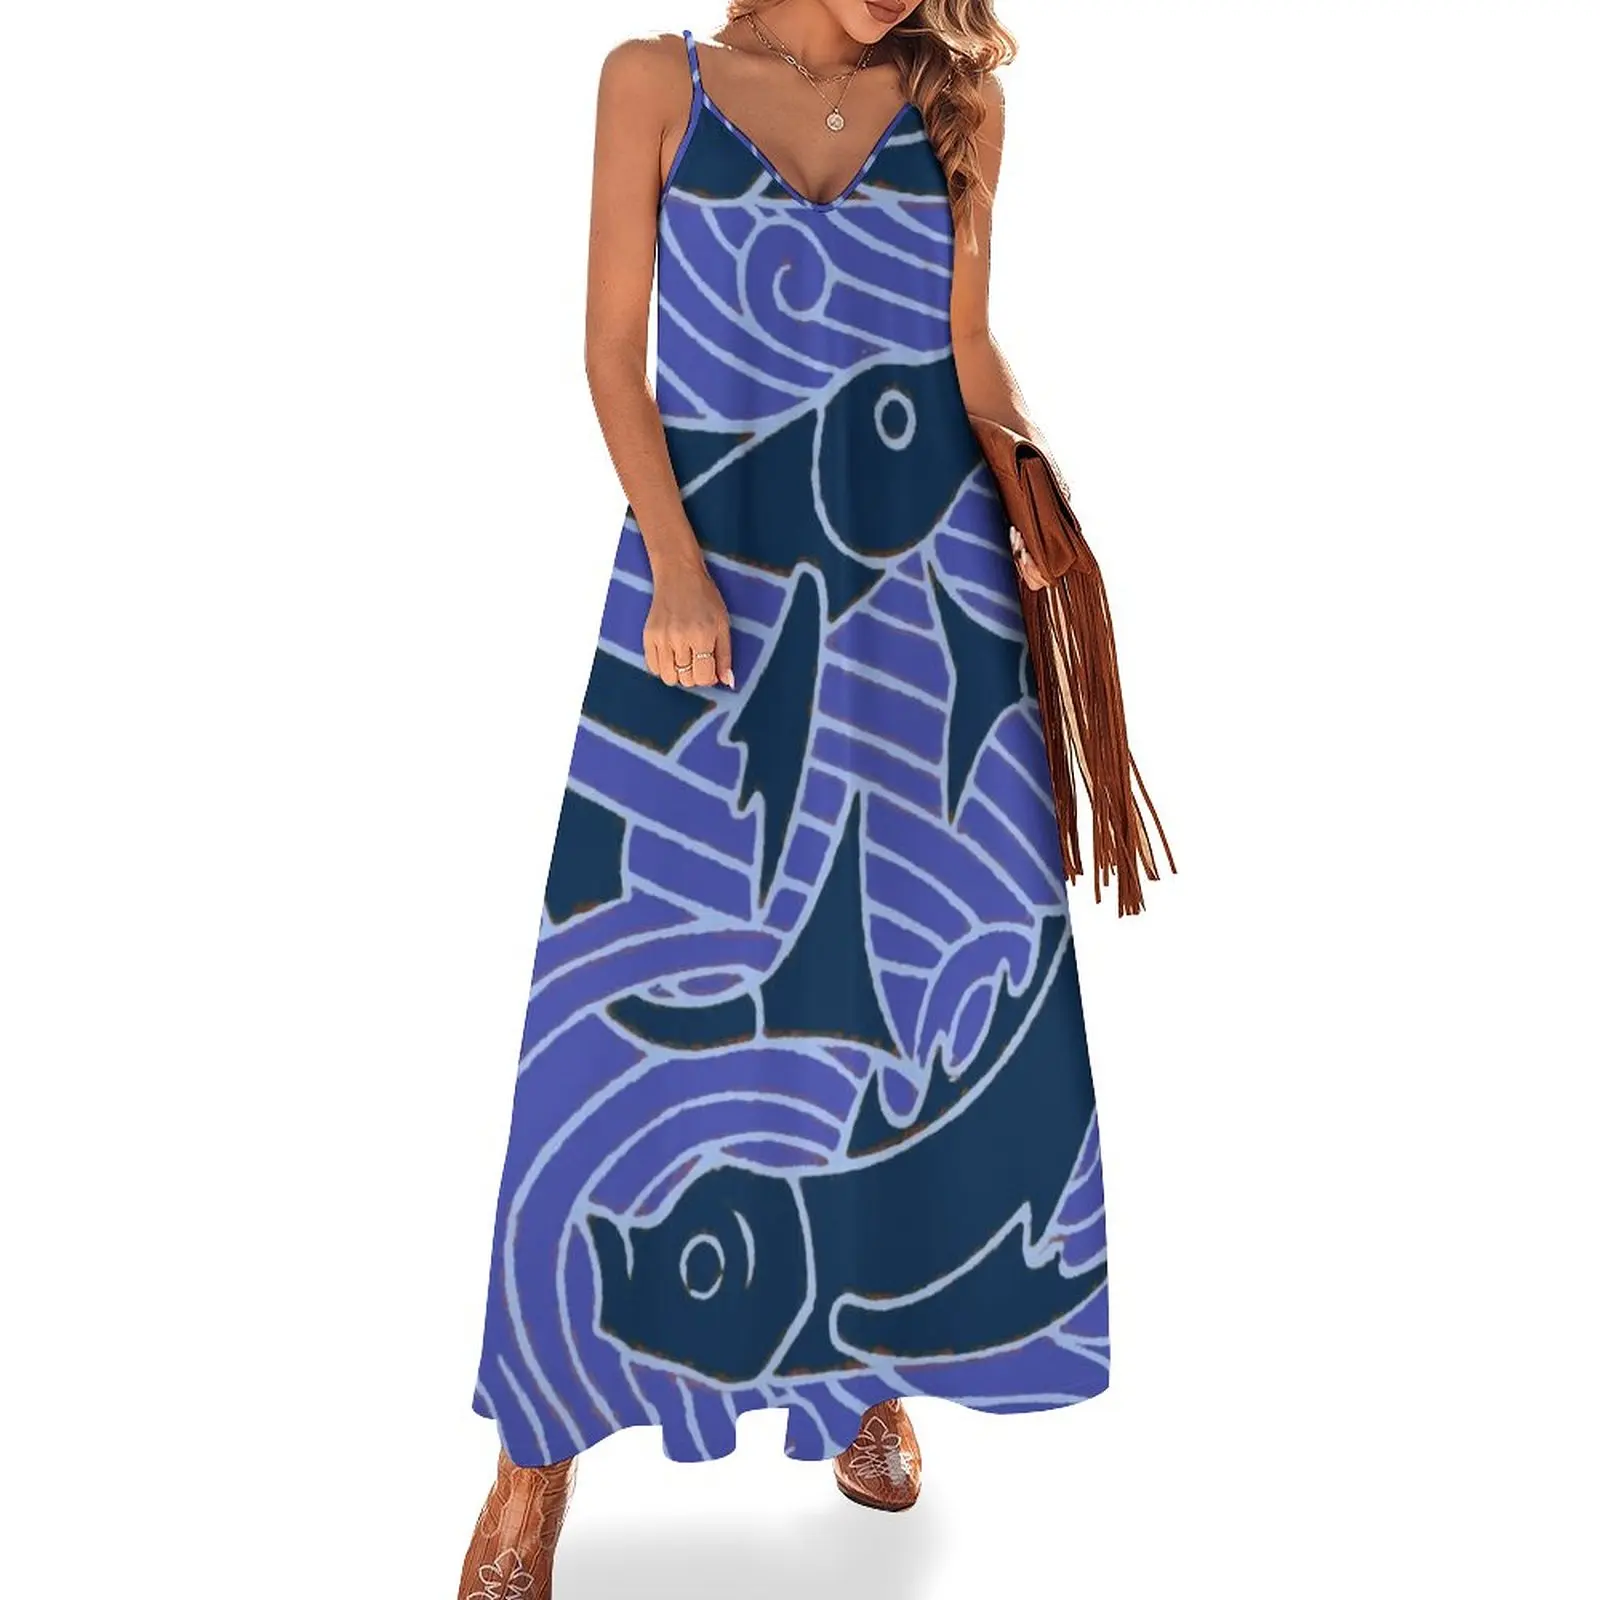 

New Blue fish Swimming Waves swimming art graphic design Sleeveless Dress ceremony dresses sexy short dresses daring